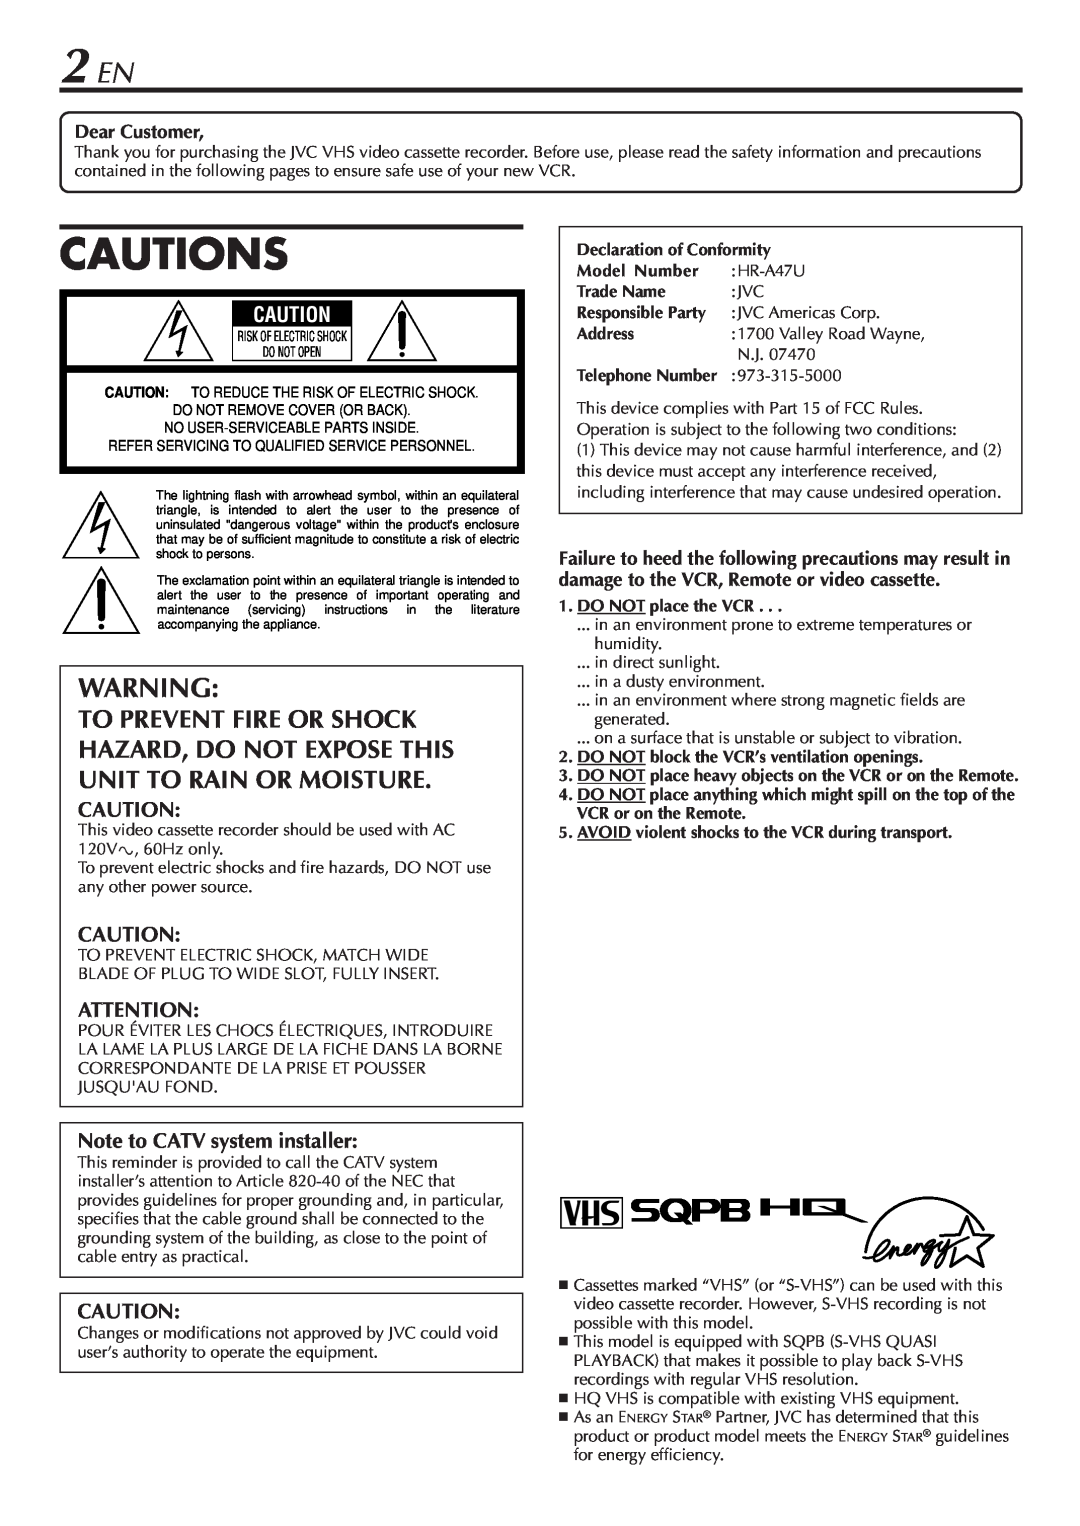 JVC HR-A47U manual 2 EN, Cautions 